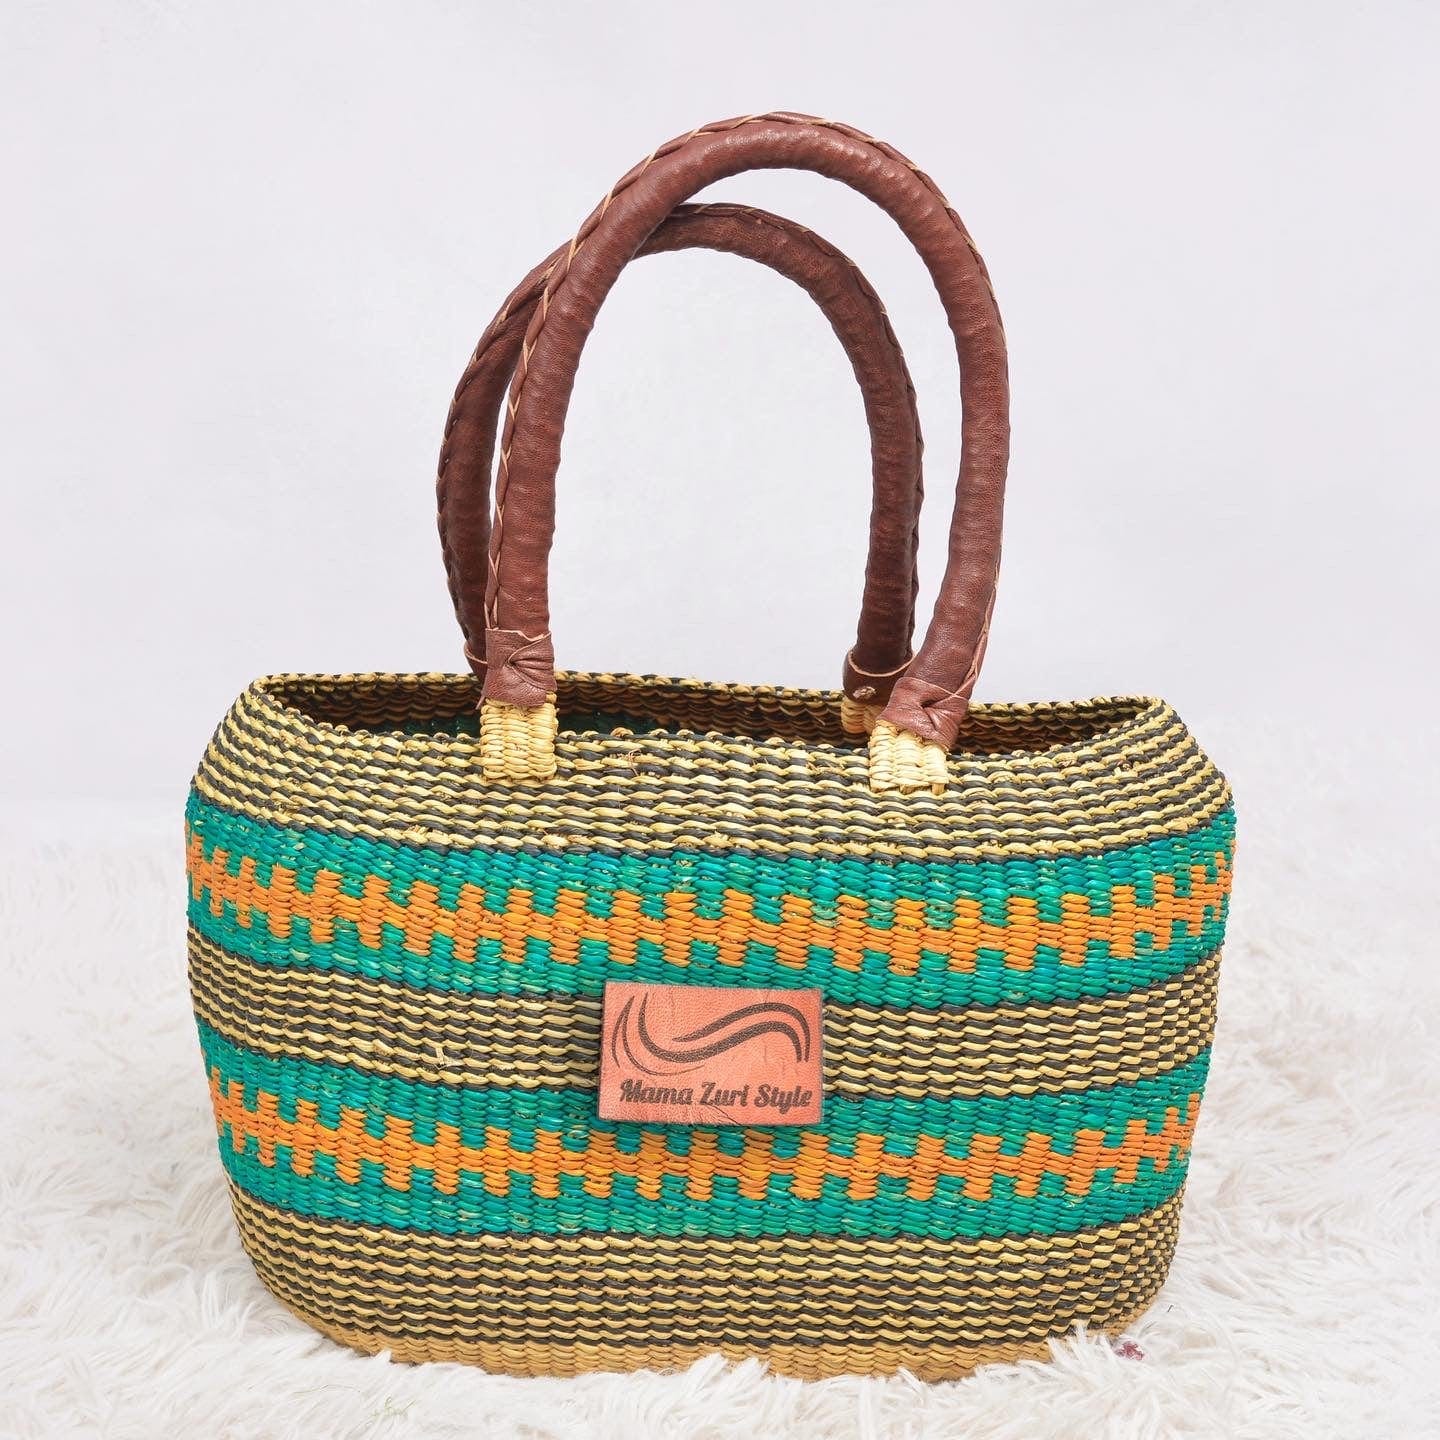 Mama Zuri Style Handbags Value Driven Handmade Straw Basket for women